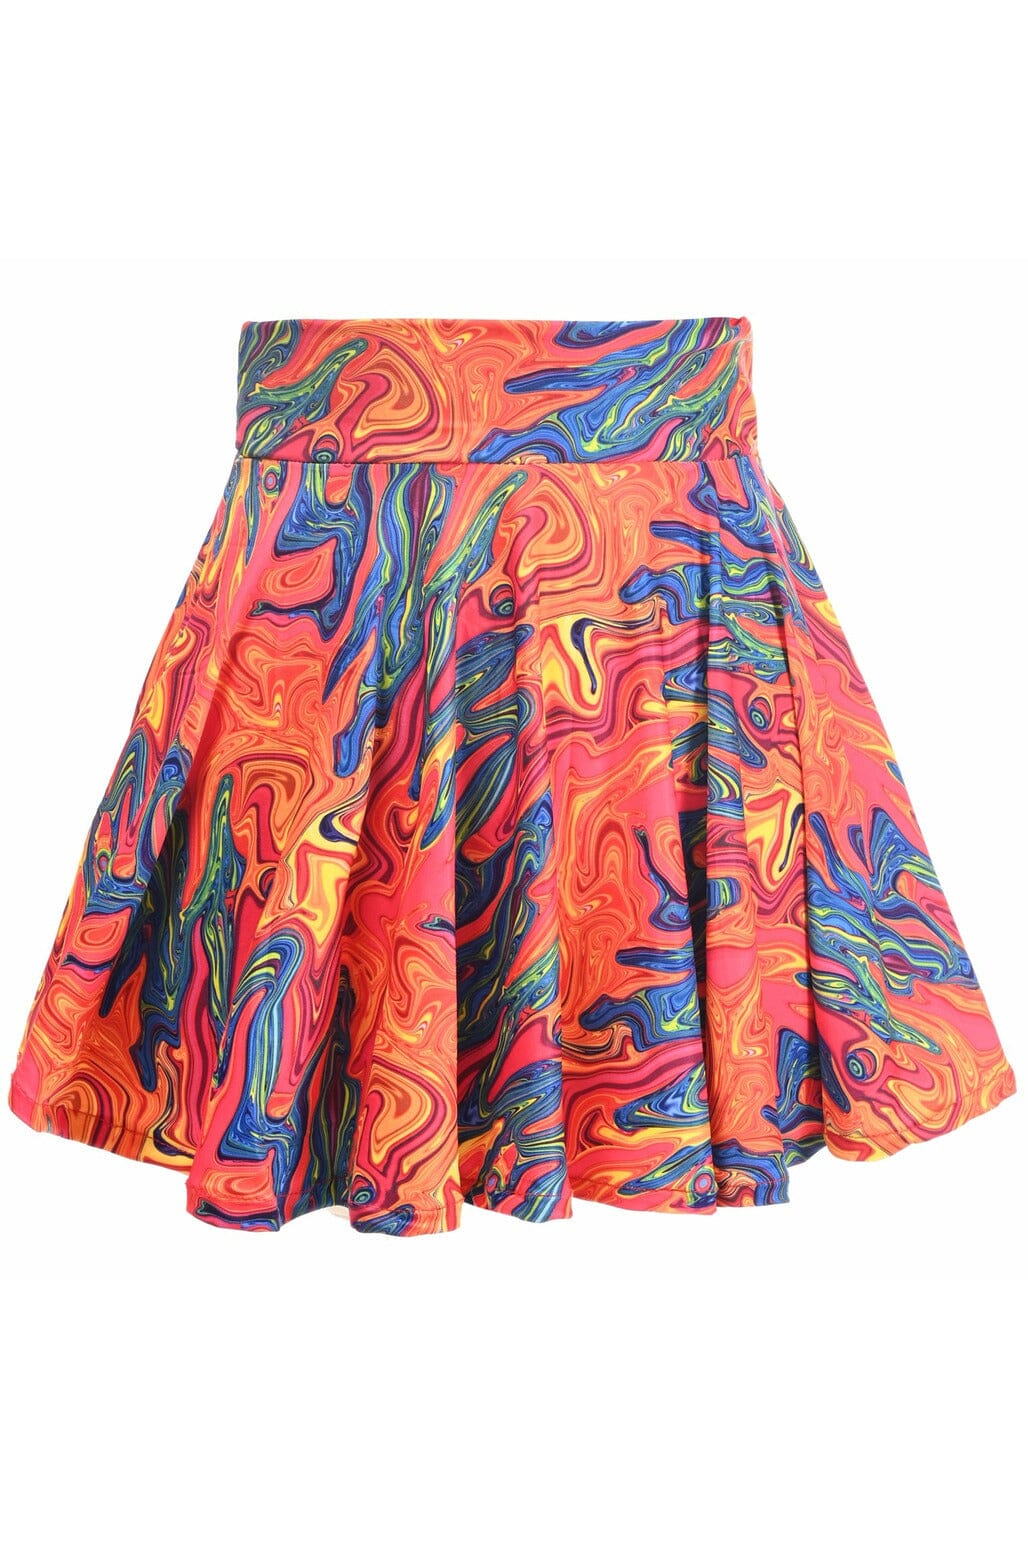 Orange Tie-Dye Stretch Lycra Skirt-Costume Skirts-Daisy Corsets-Orange-XS-SEXYSHOES.COM